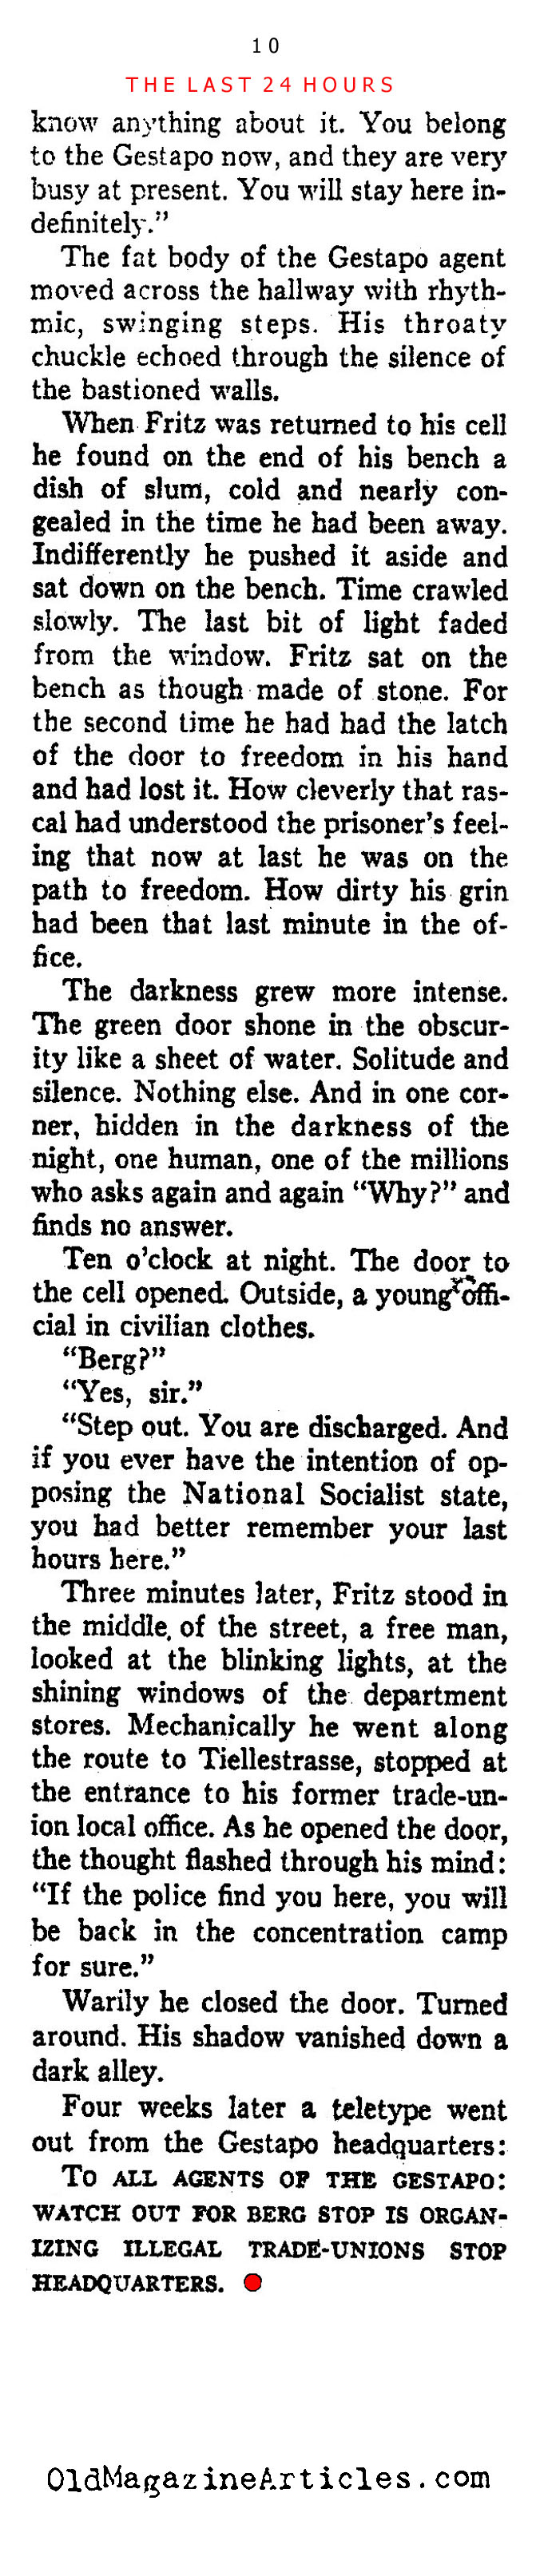 A German Dissident Recalls His Incarceration  (Ken Magazine, 1938)